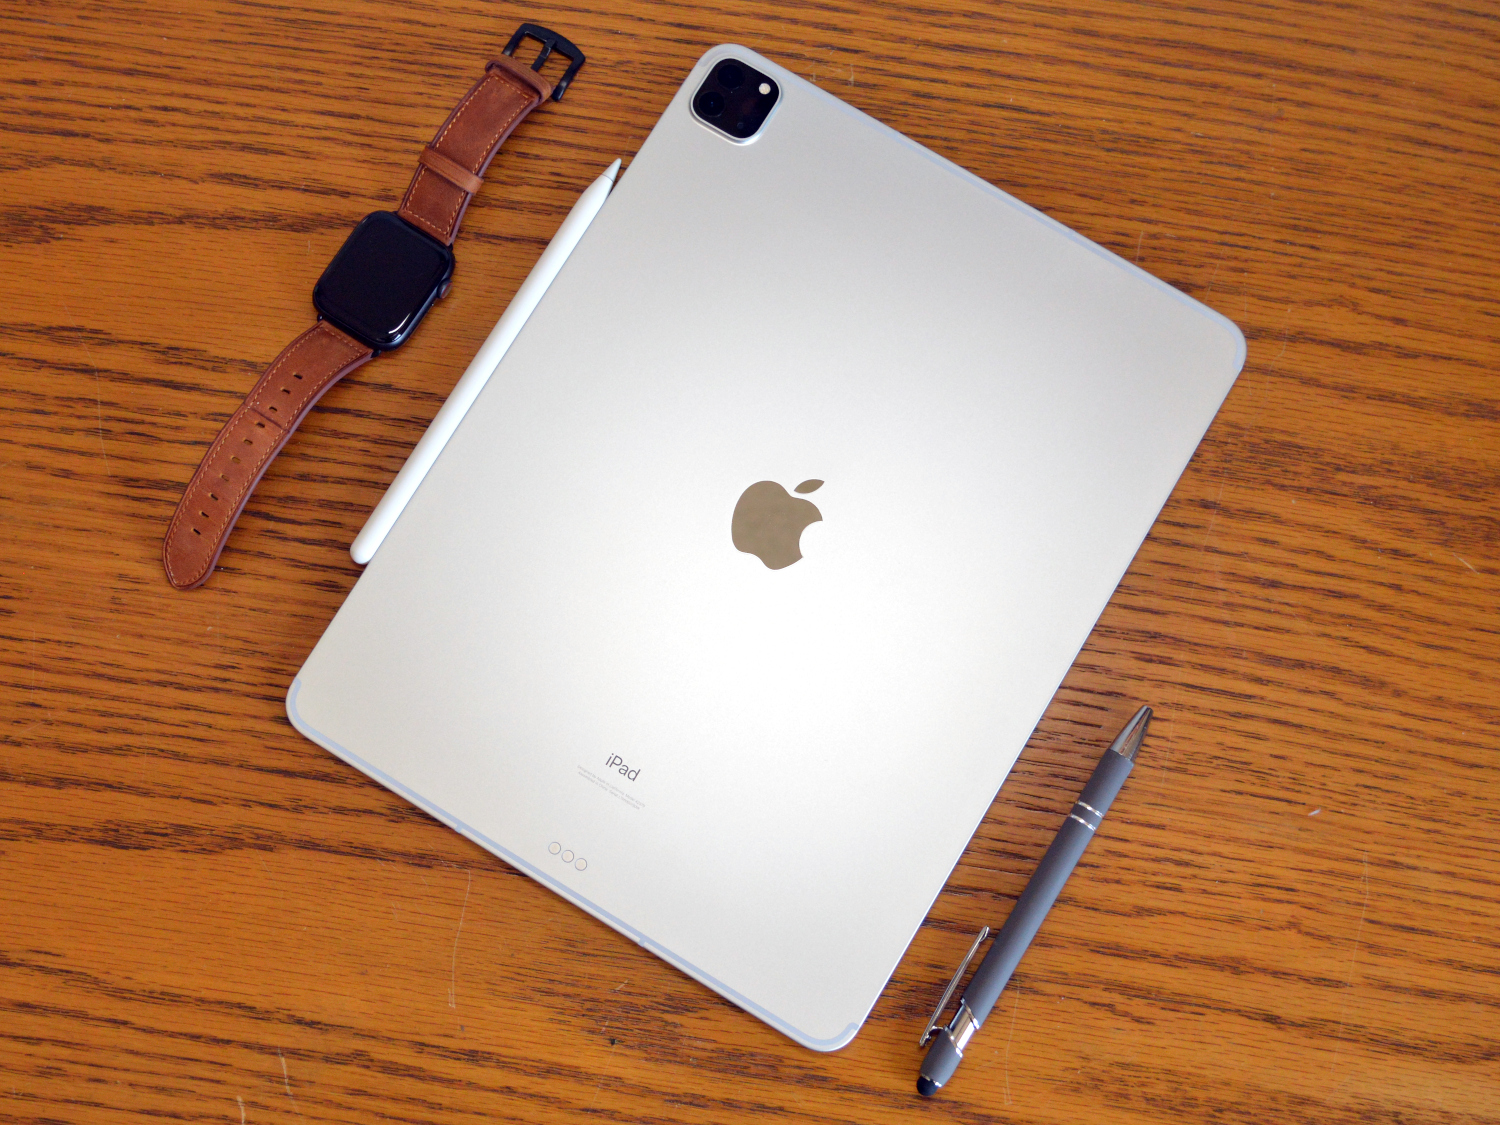 Apple iPad Pro 2021 model.